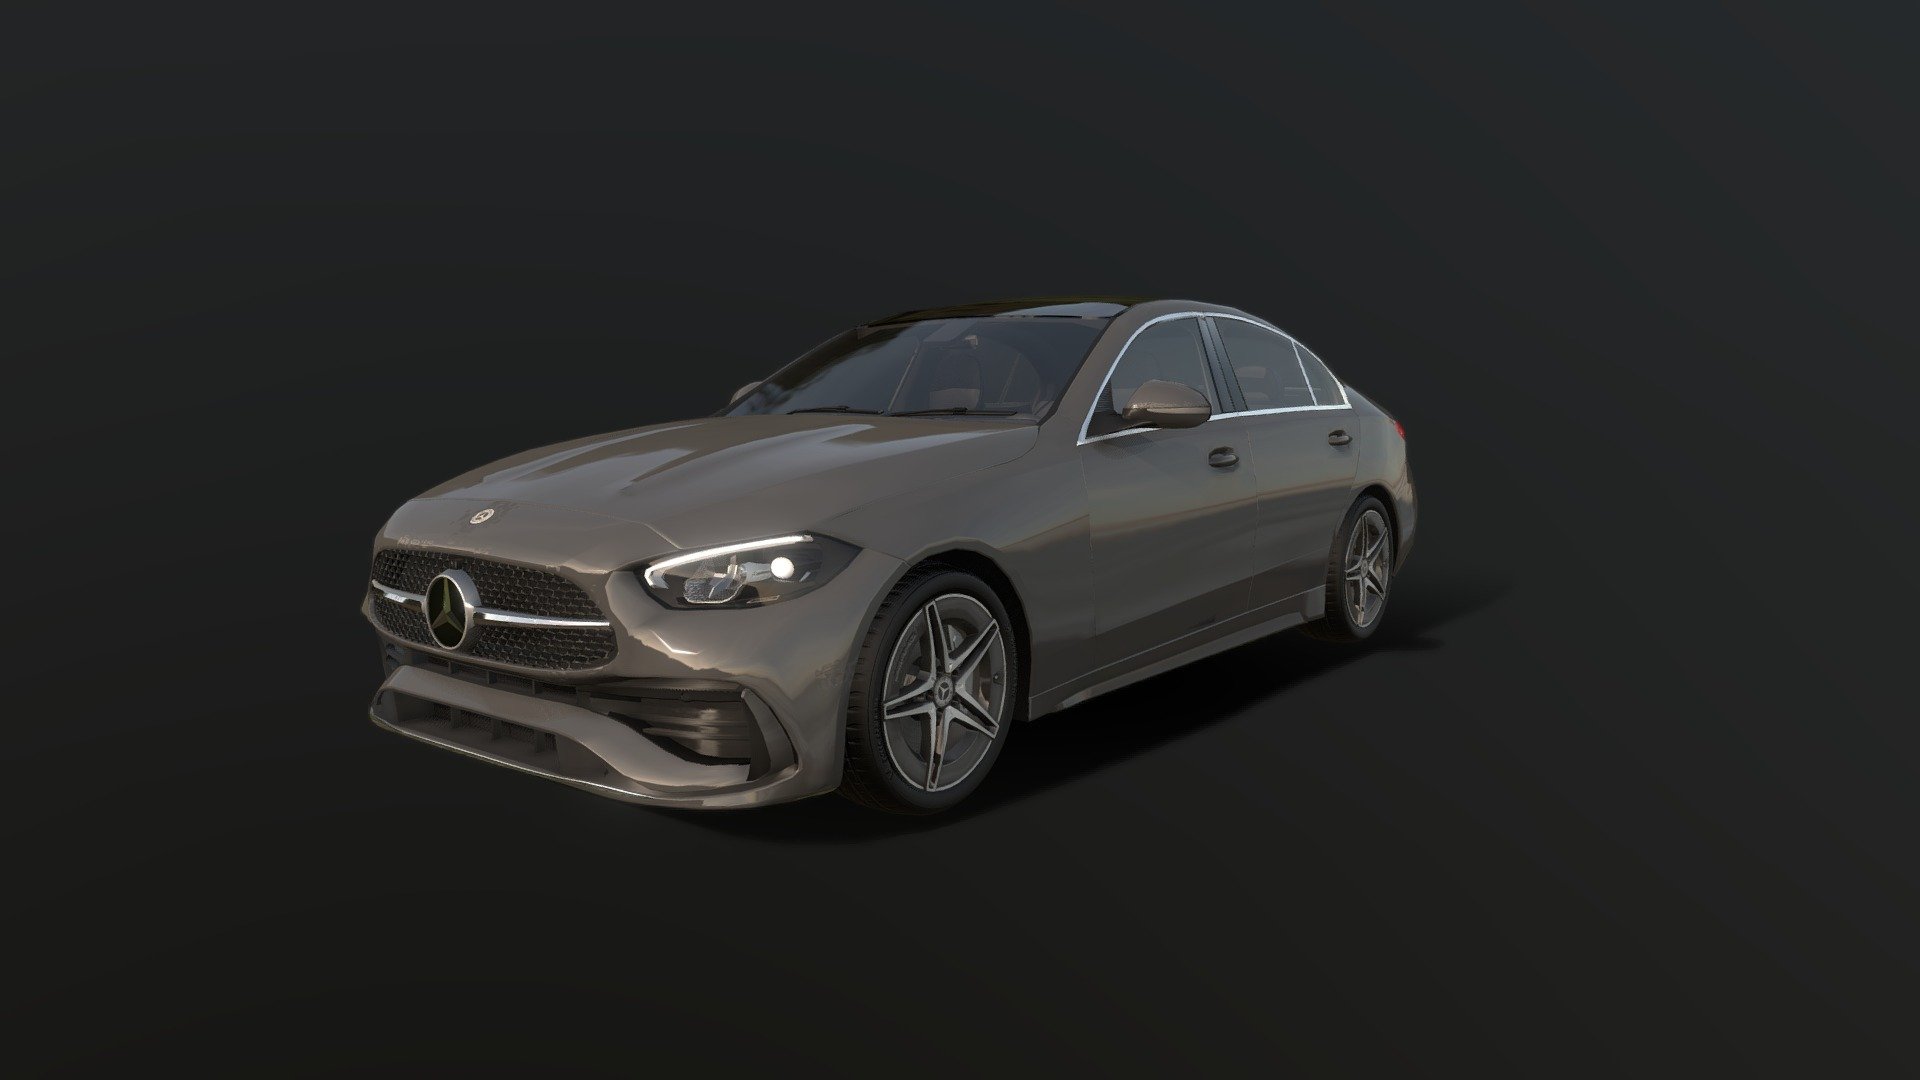 Low poly, low res asset
Game ready - Mercedes C200 2022 - 3D model by Ari Brena (@ari.delabrena) 3d model